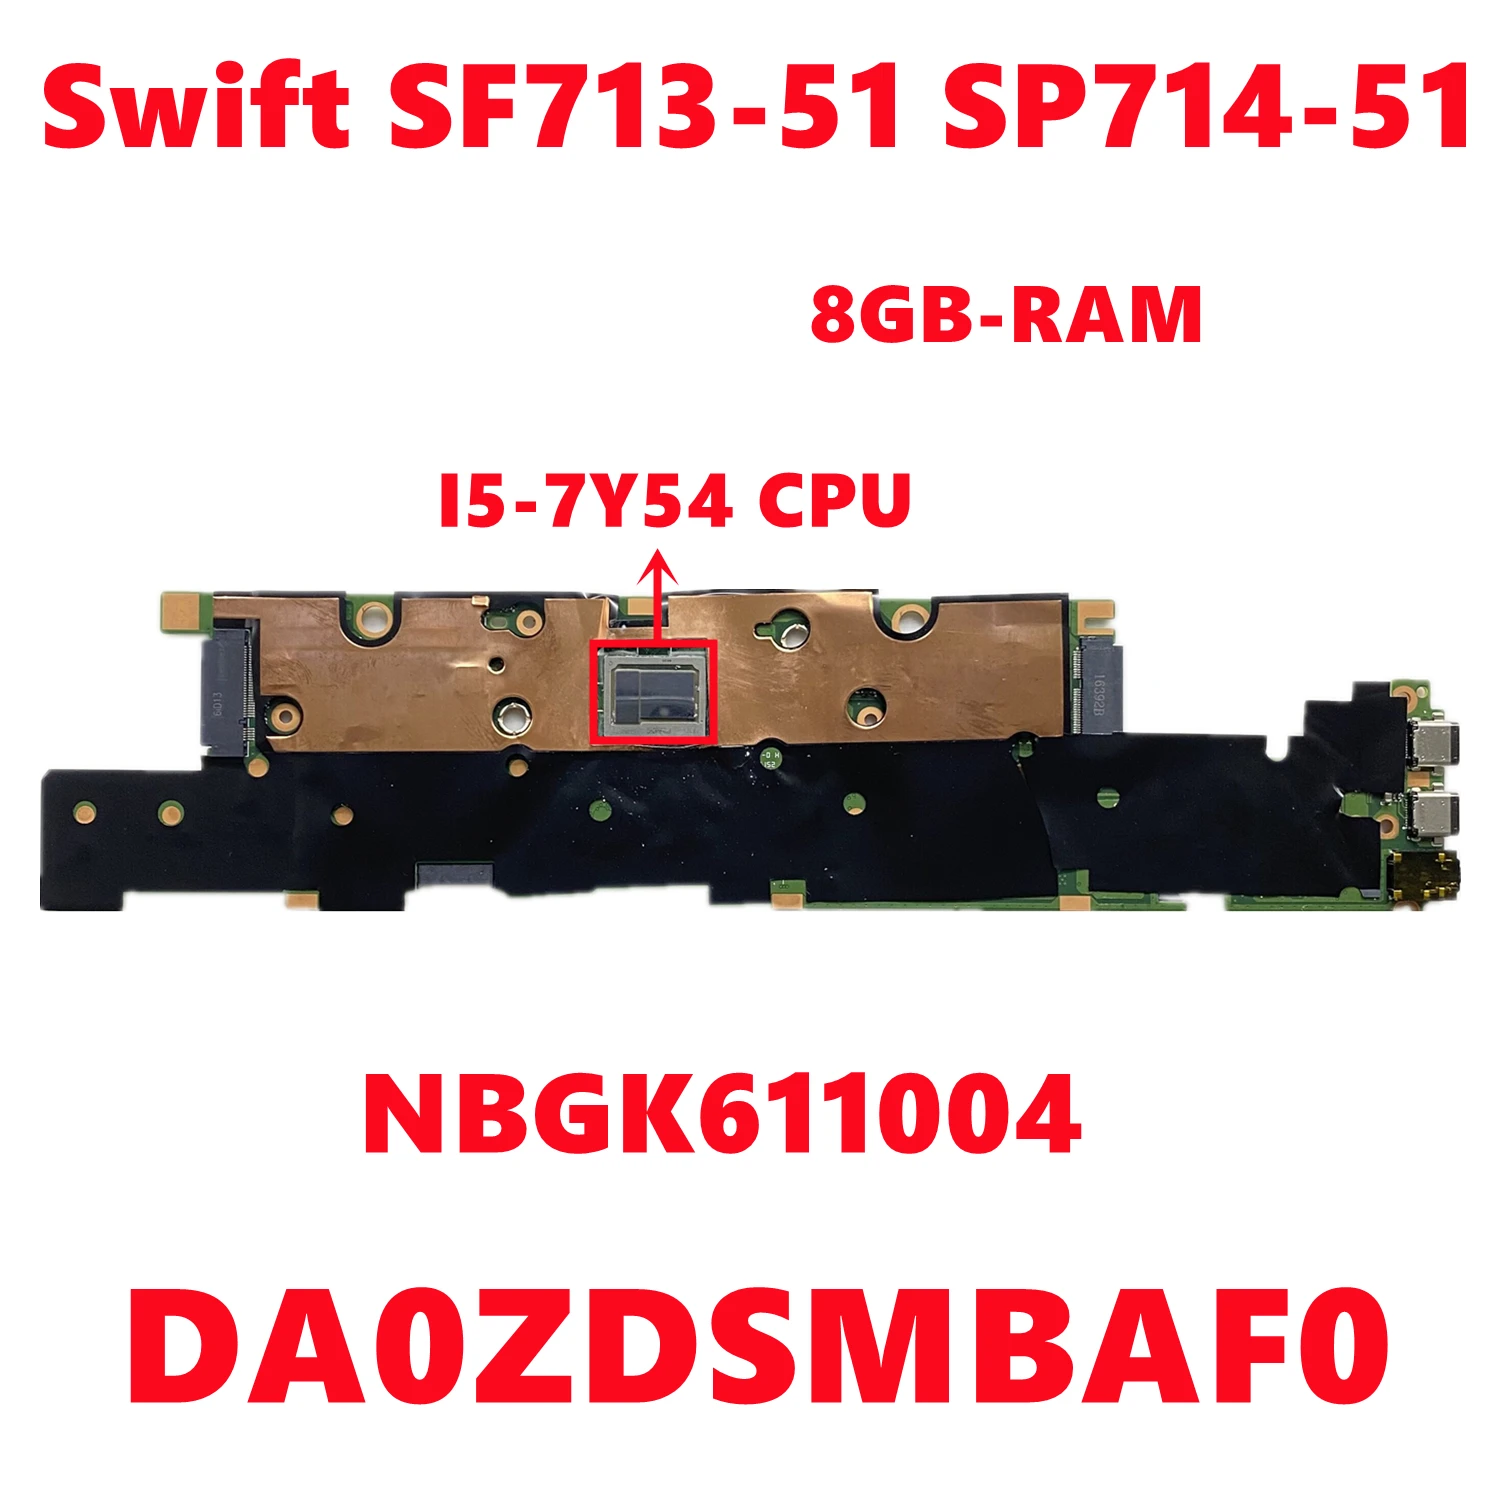 

NBGK611004 NB.GK611.004 For Acer Swift SF713-51 SP714-51 Laptop Motherboard DA0ZDSMBAF0 With I5-7Y54 CPU 8GB-RAM 100% Tested OK